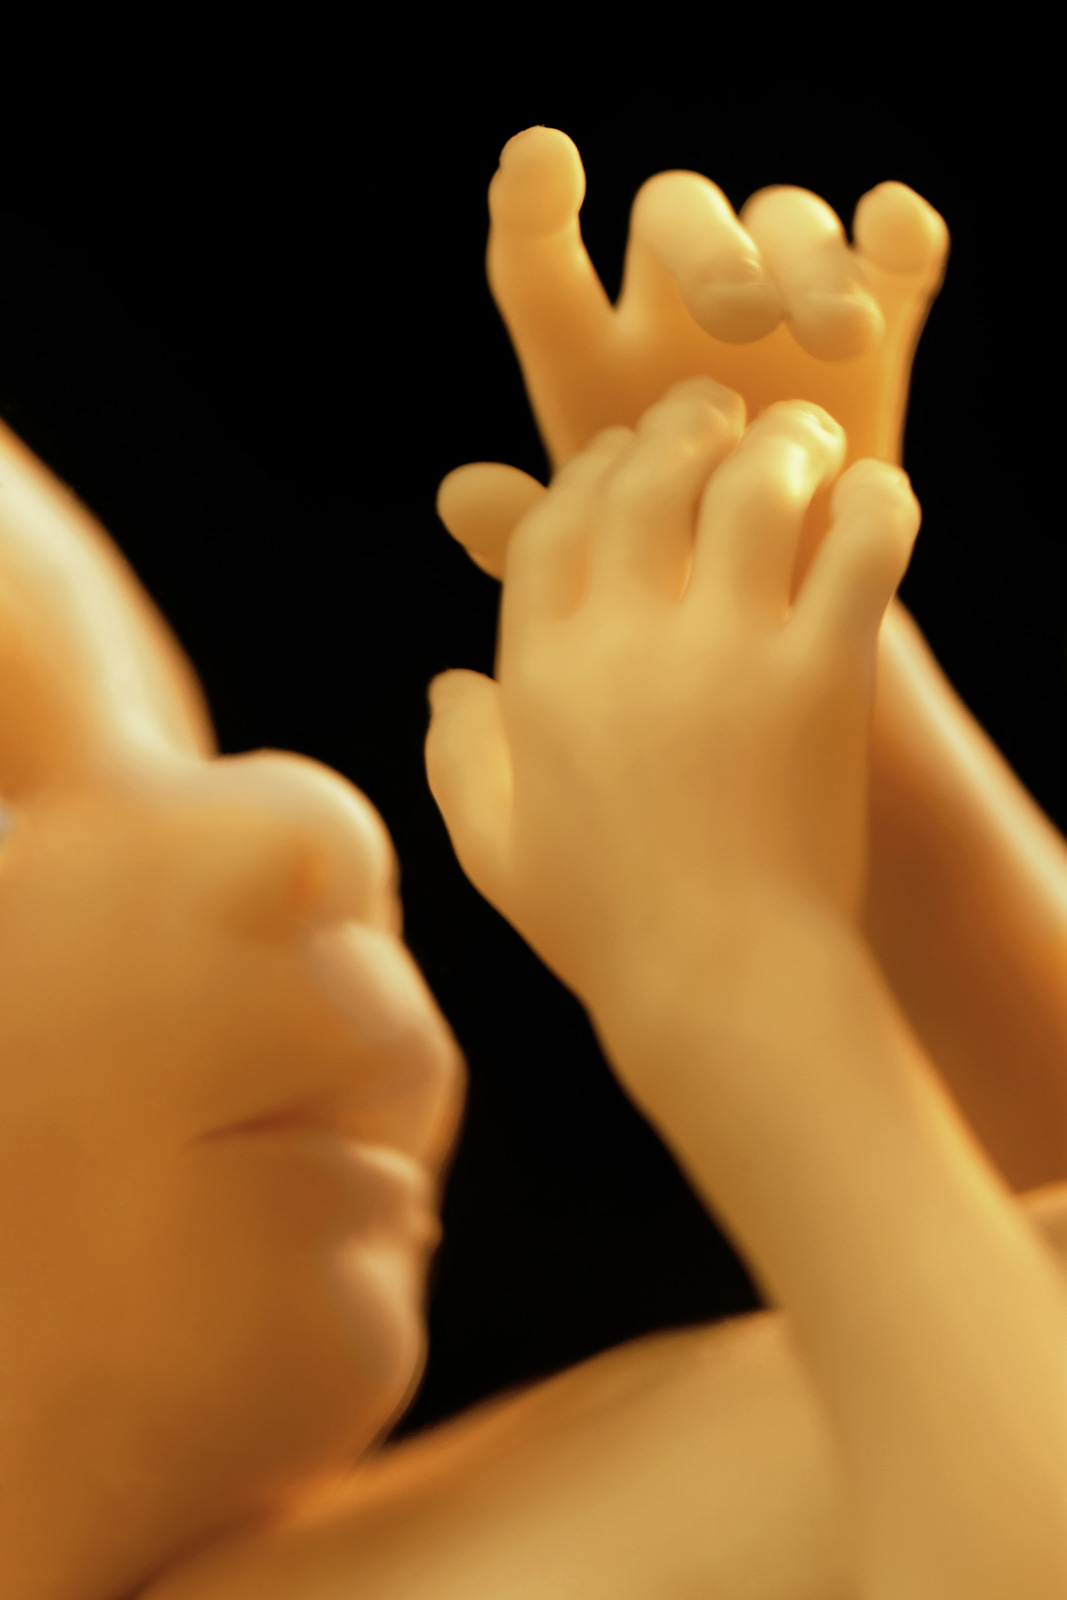 Human fetus, National Museum of Health and Medicine, Washington D.C., USA